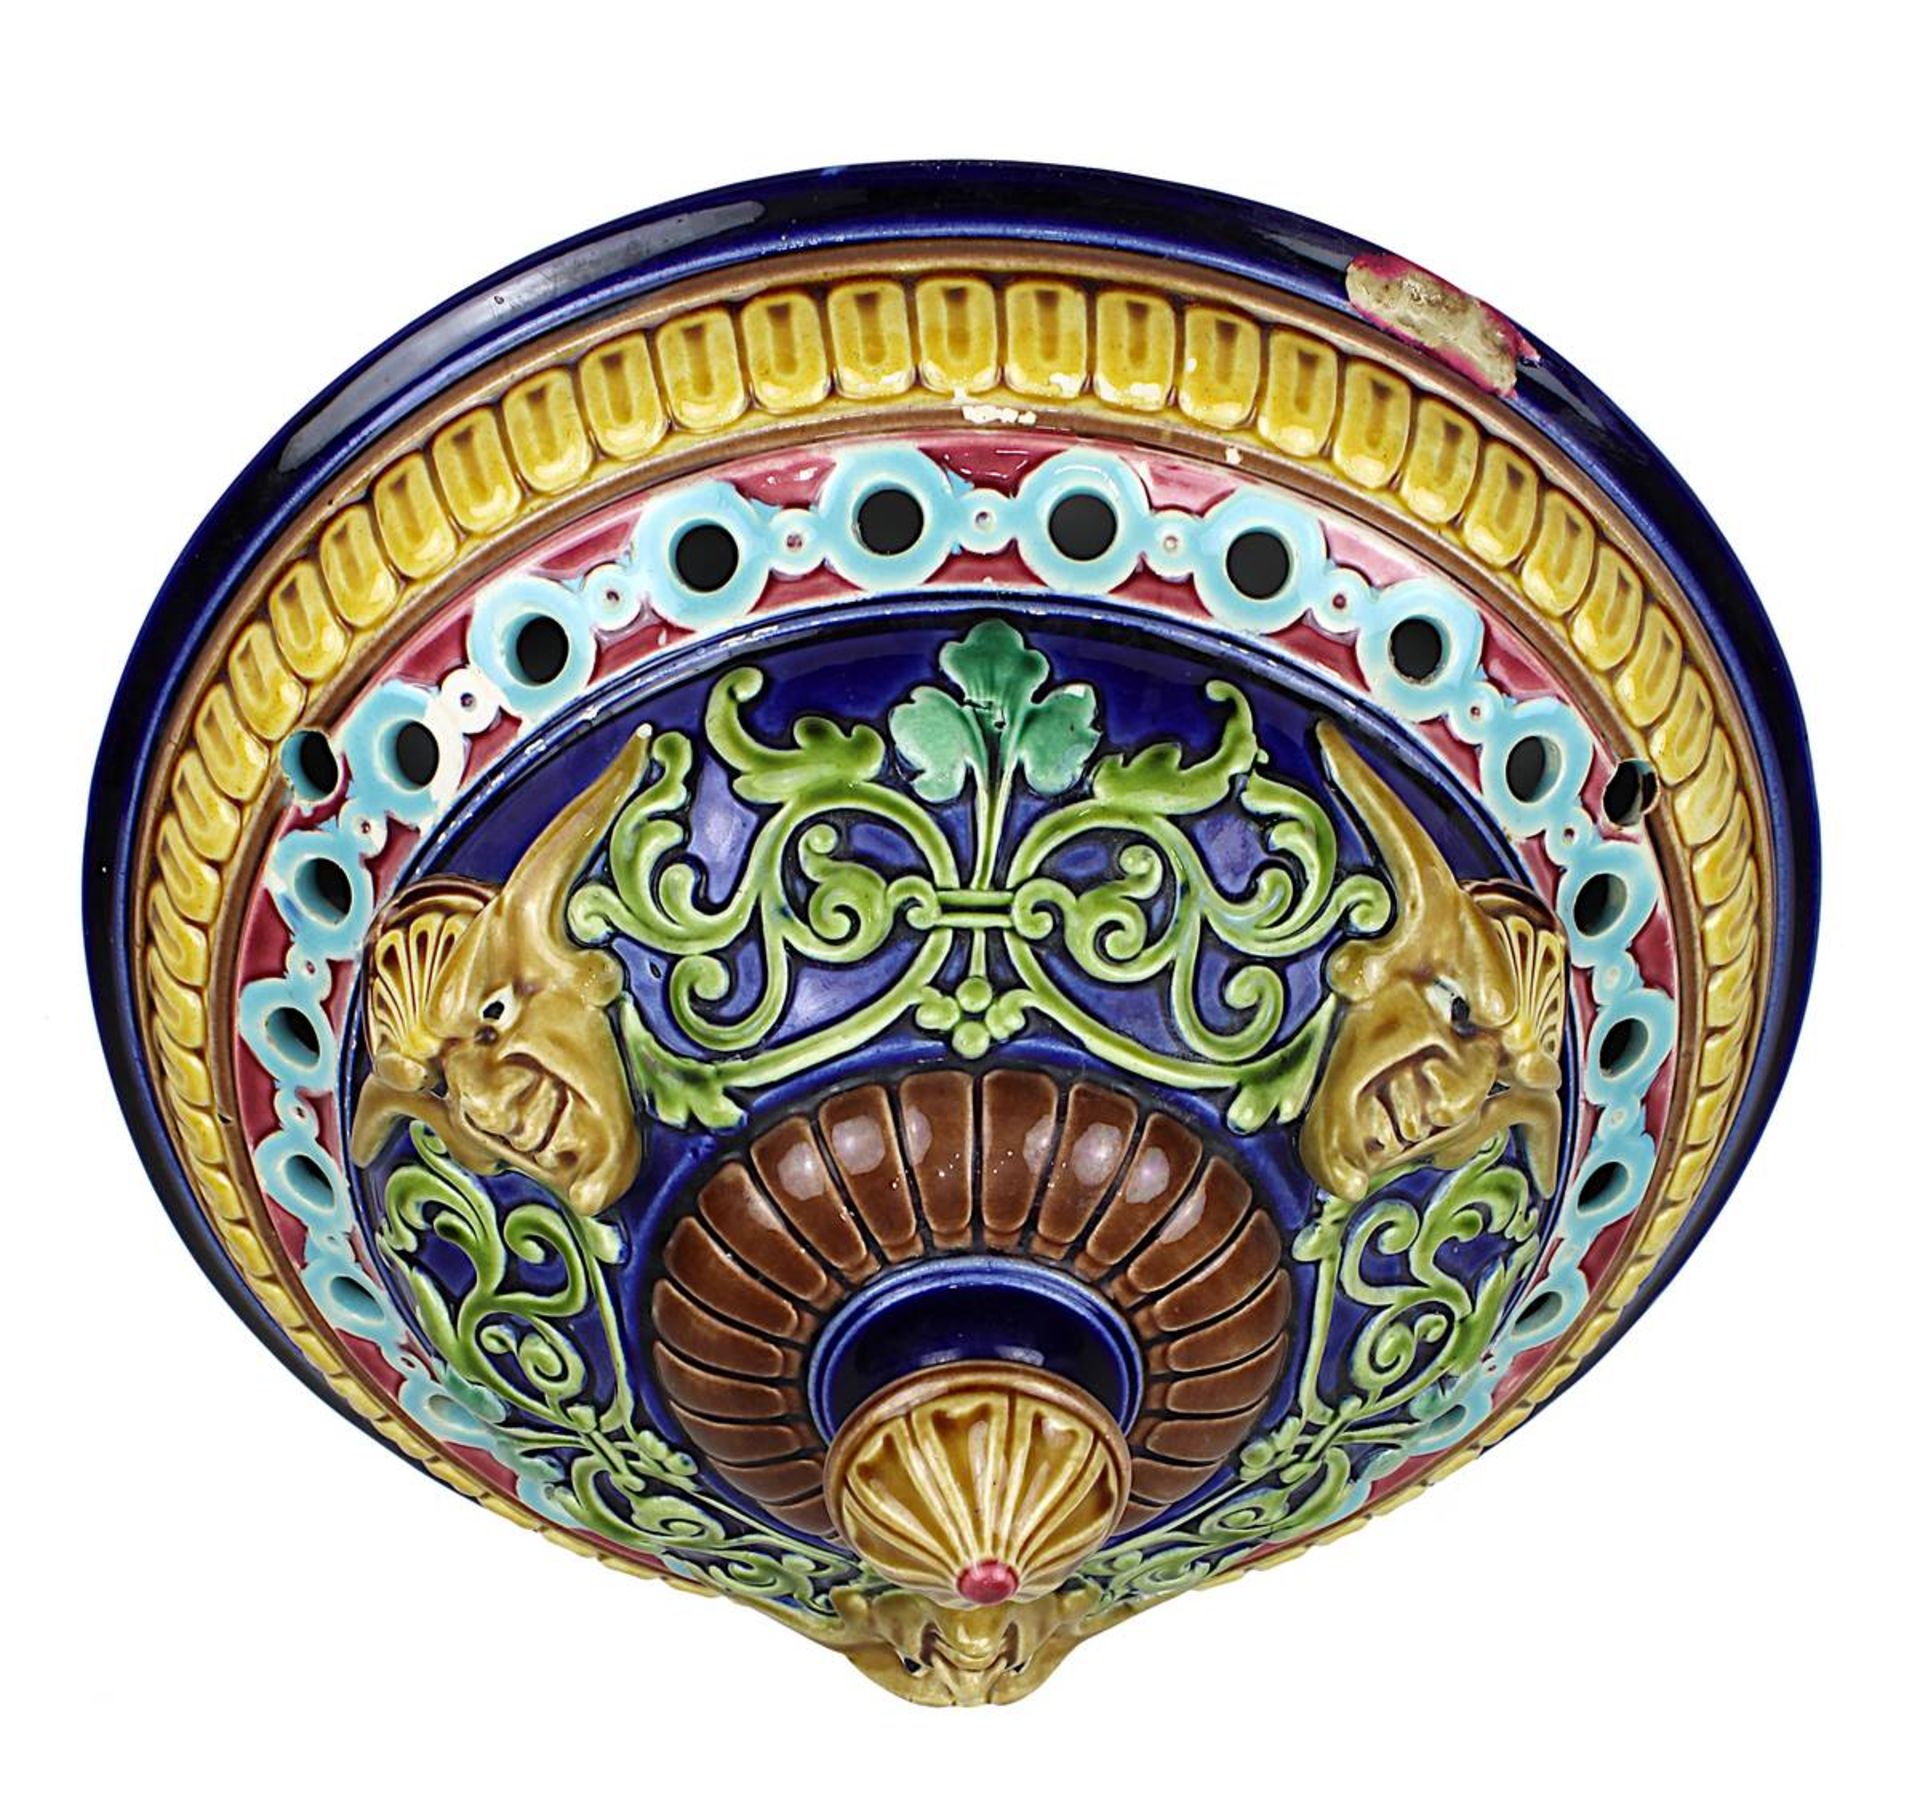 Sarreguemines Majolika-Blumenampel, Utzschneider & Cie um 1880, Keramik heller Scherben, polychrom